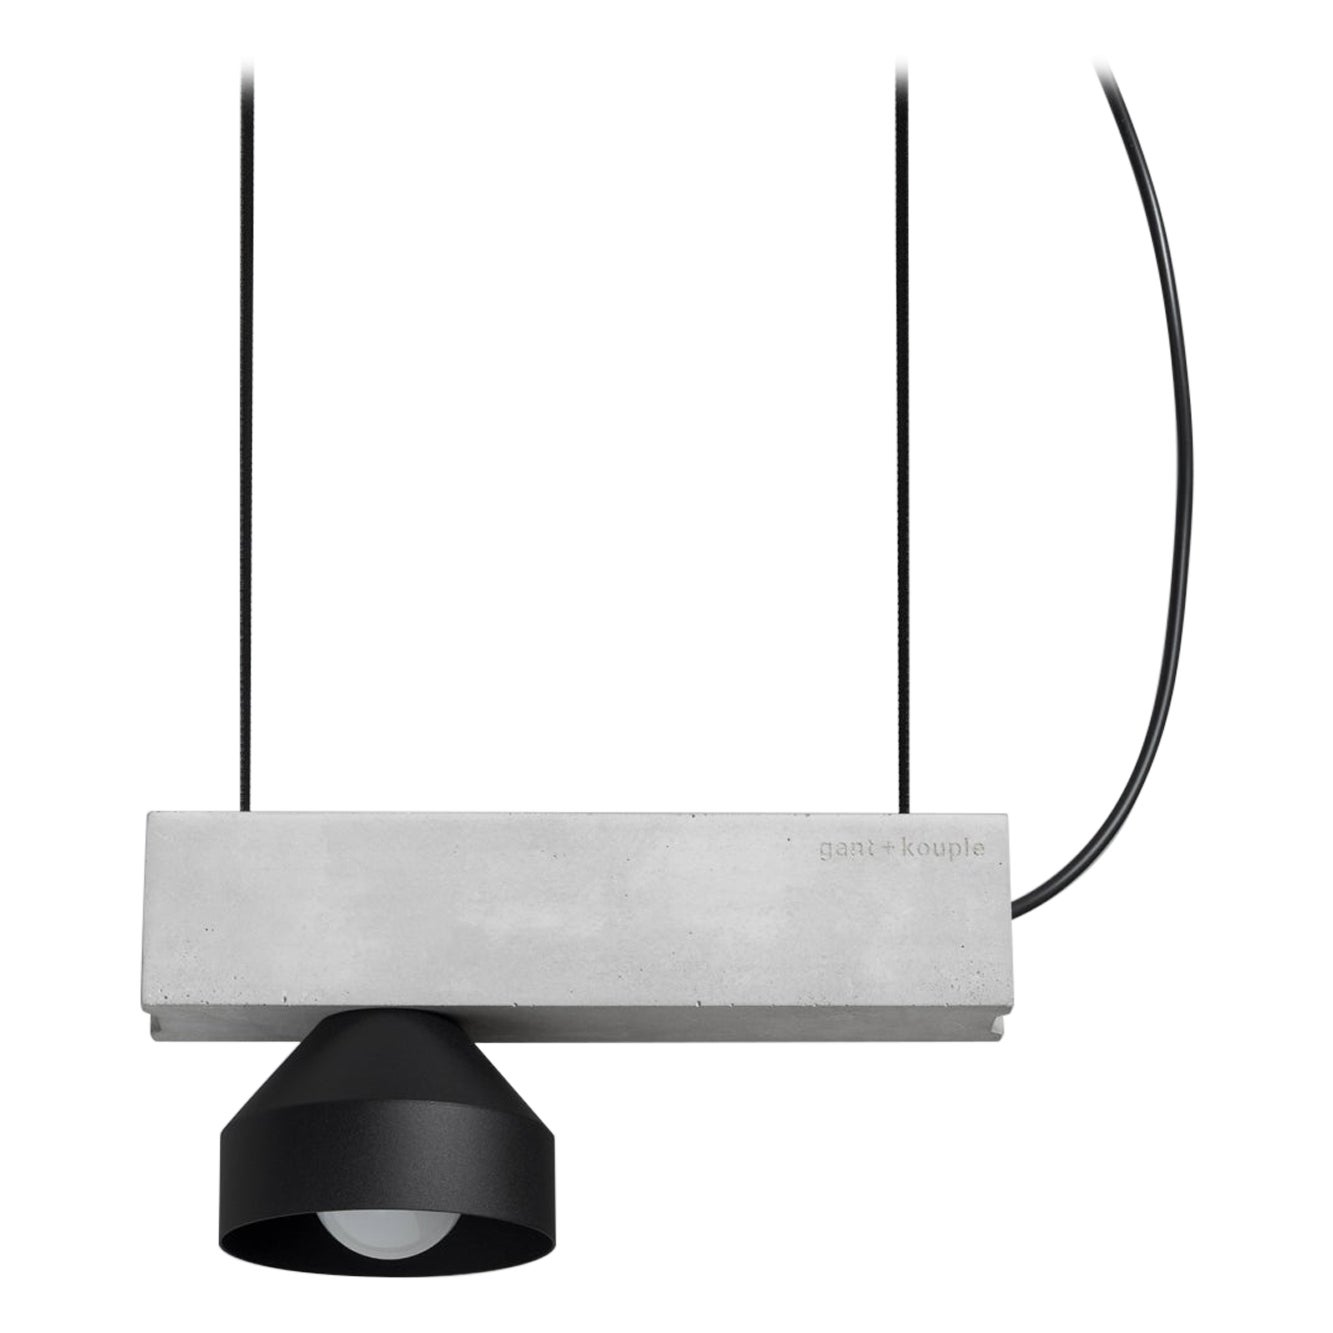 Black Block Pendant Lamp by +kouple For Sale